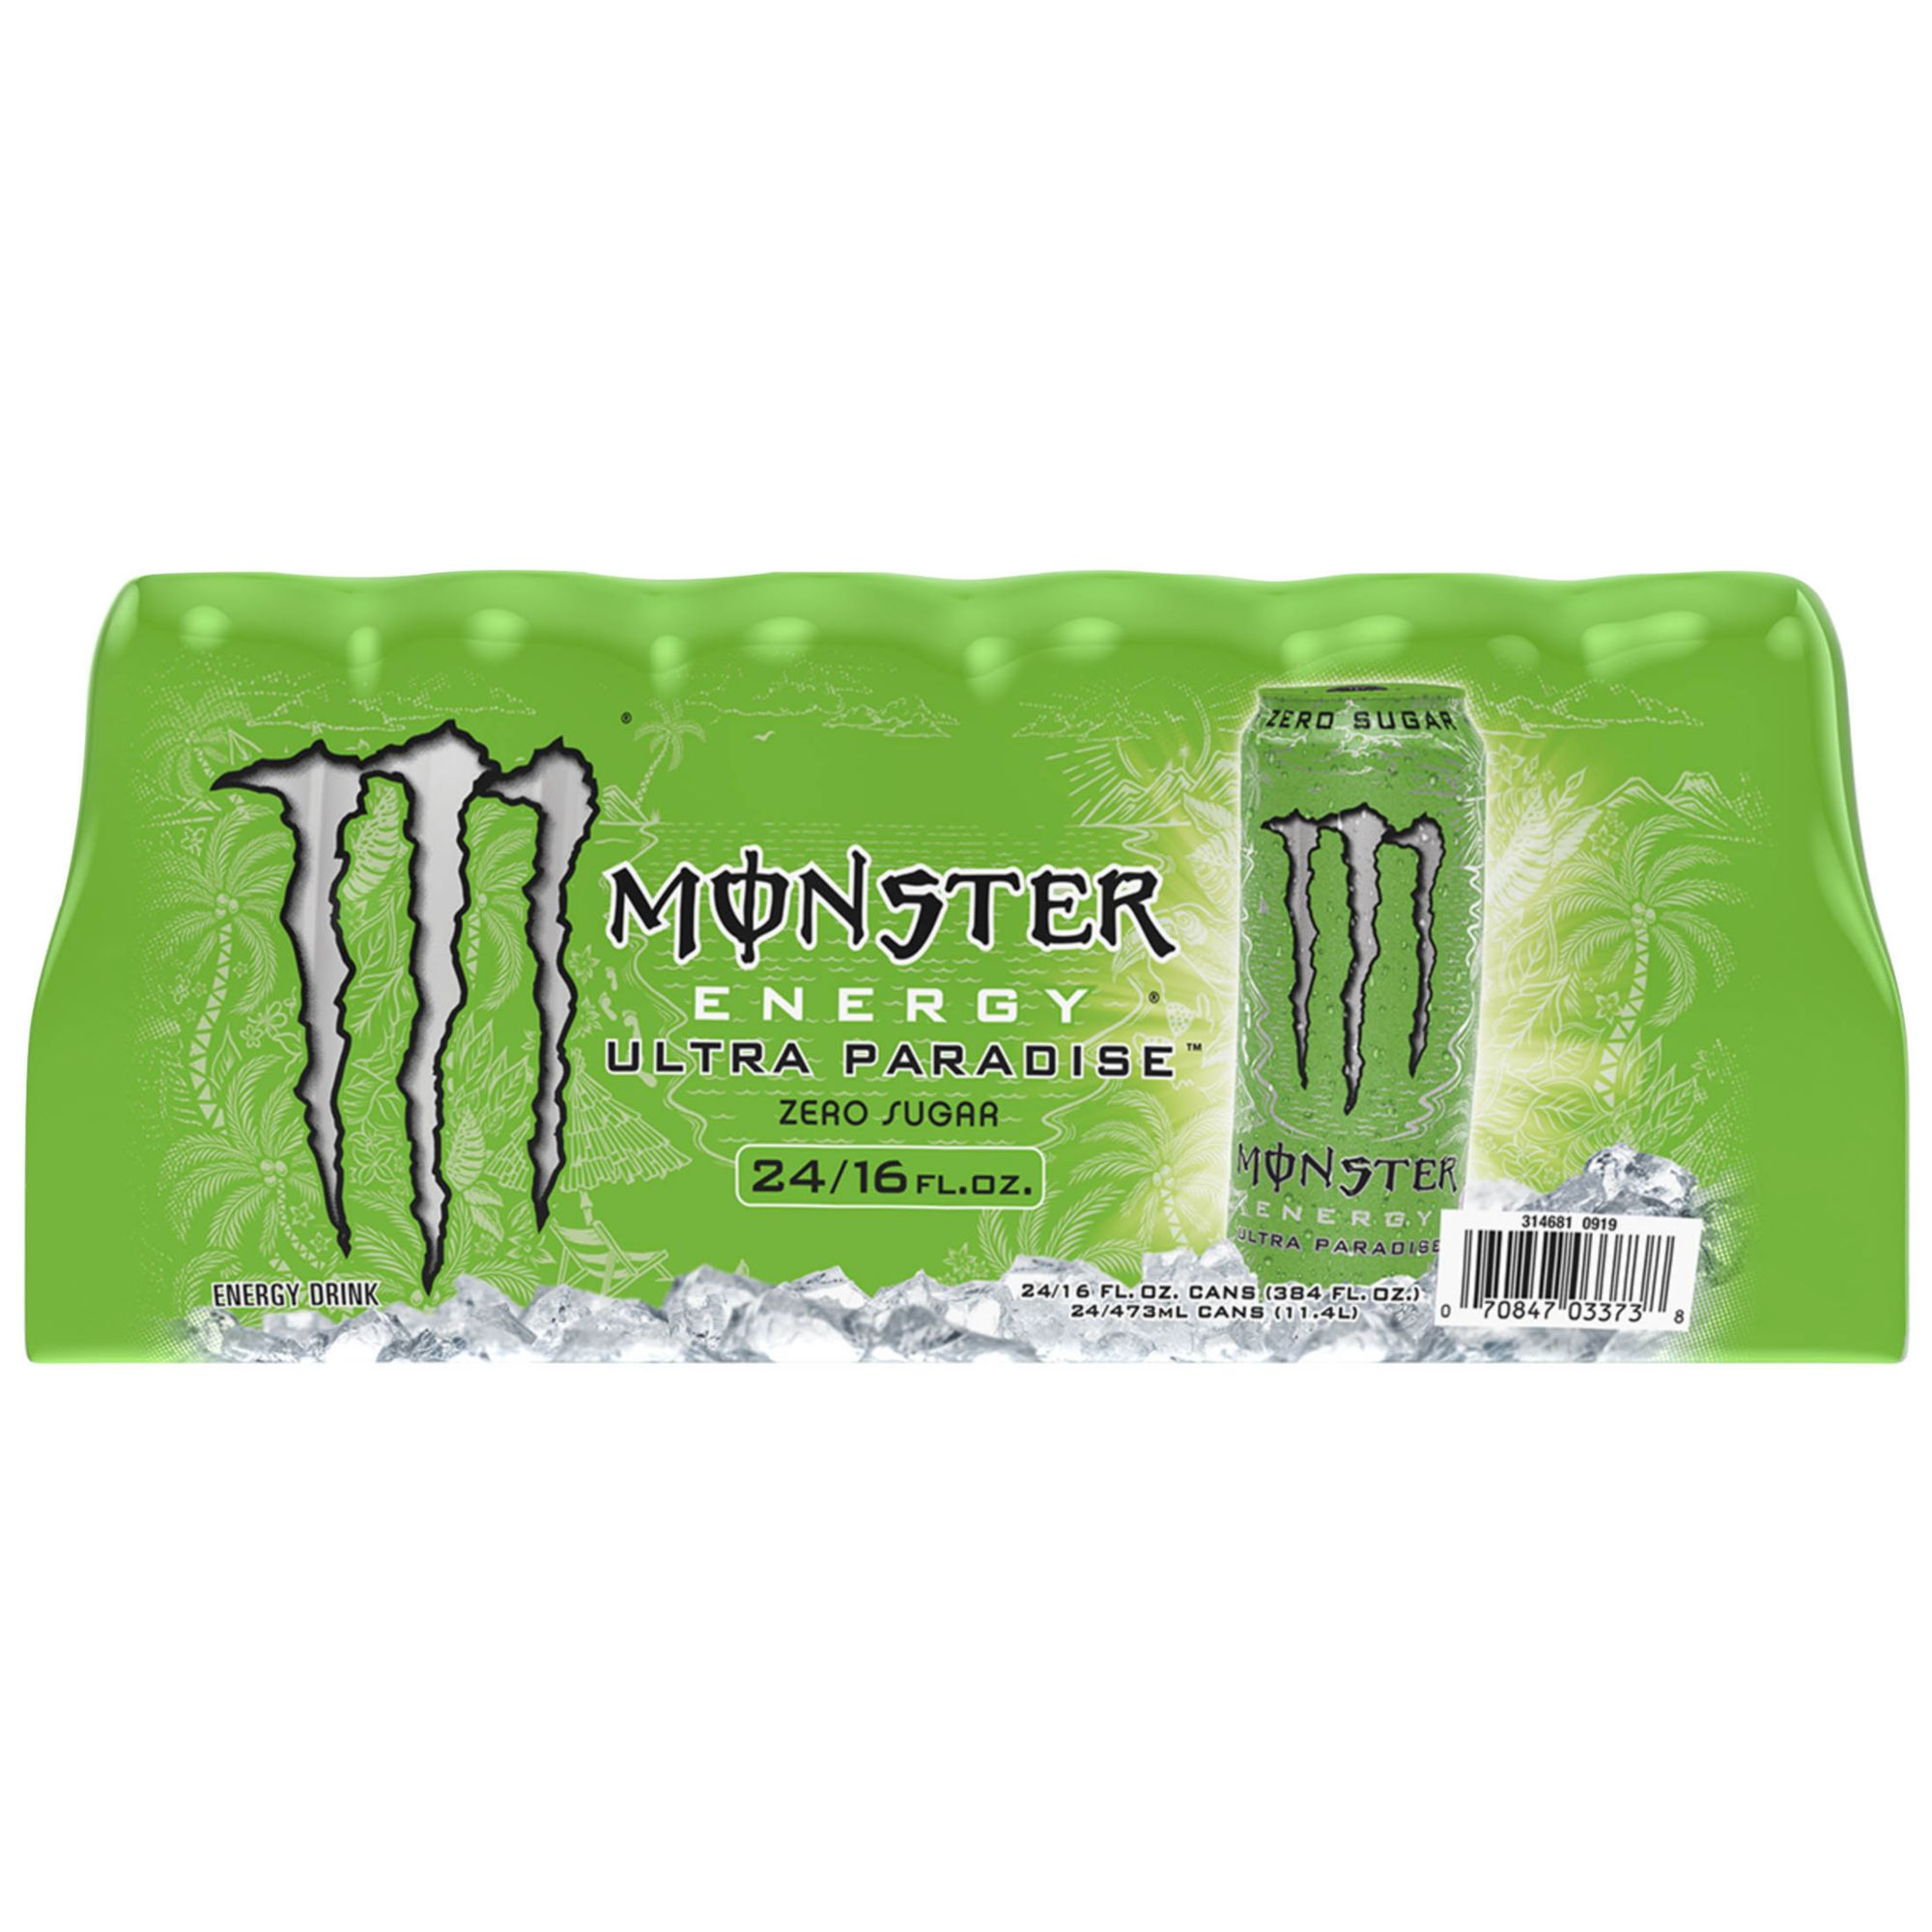 Monster Energy Ultra Paradise, 24 pk./16 oz. - BJs Wholesale Club